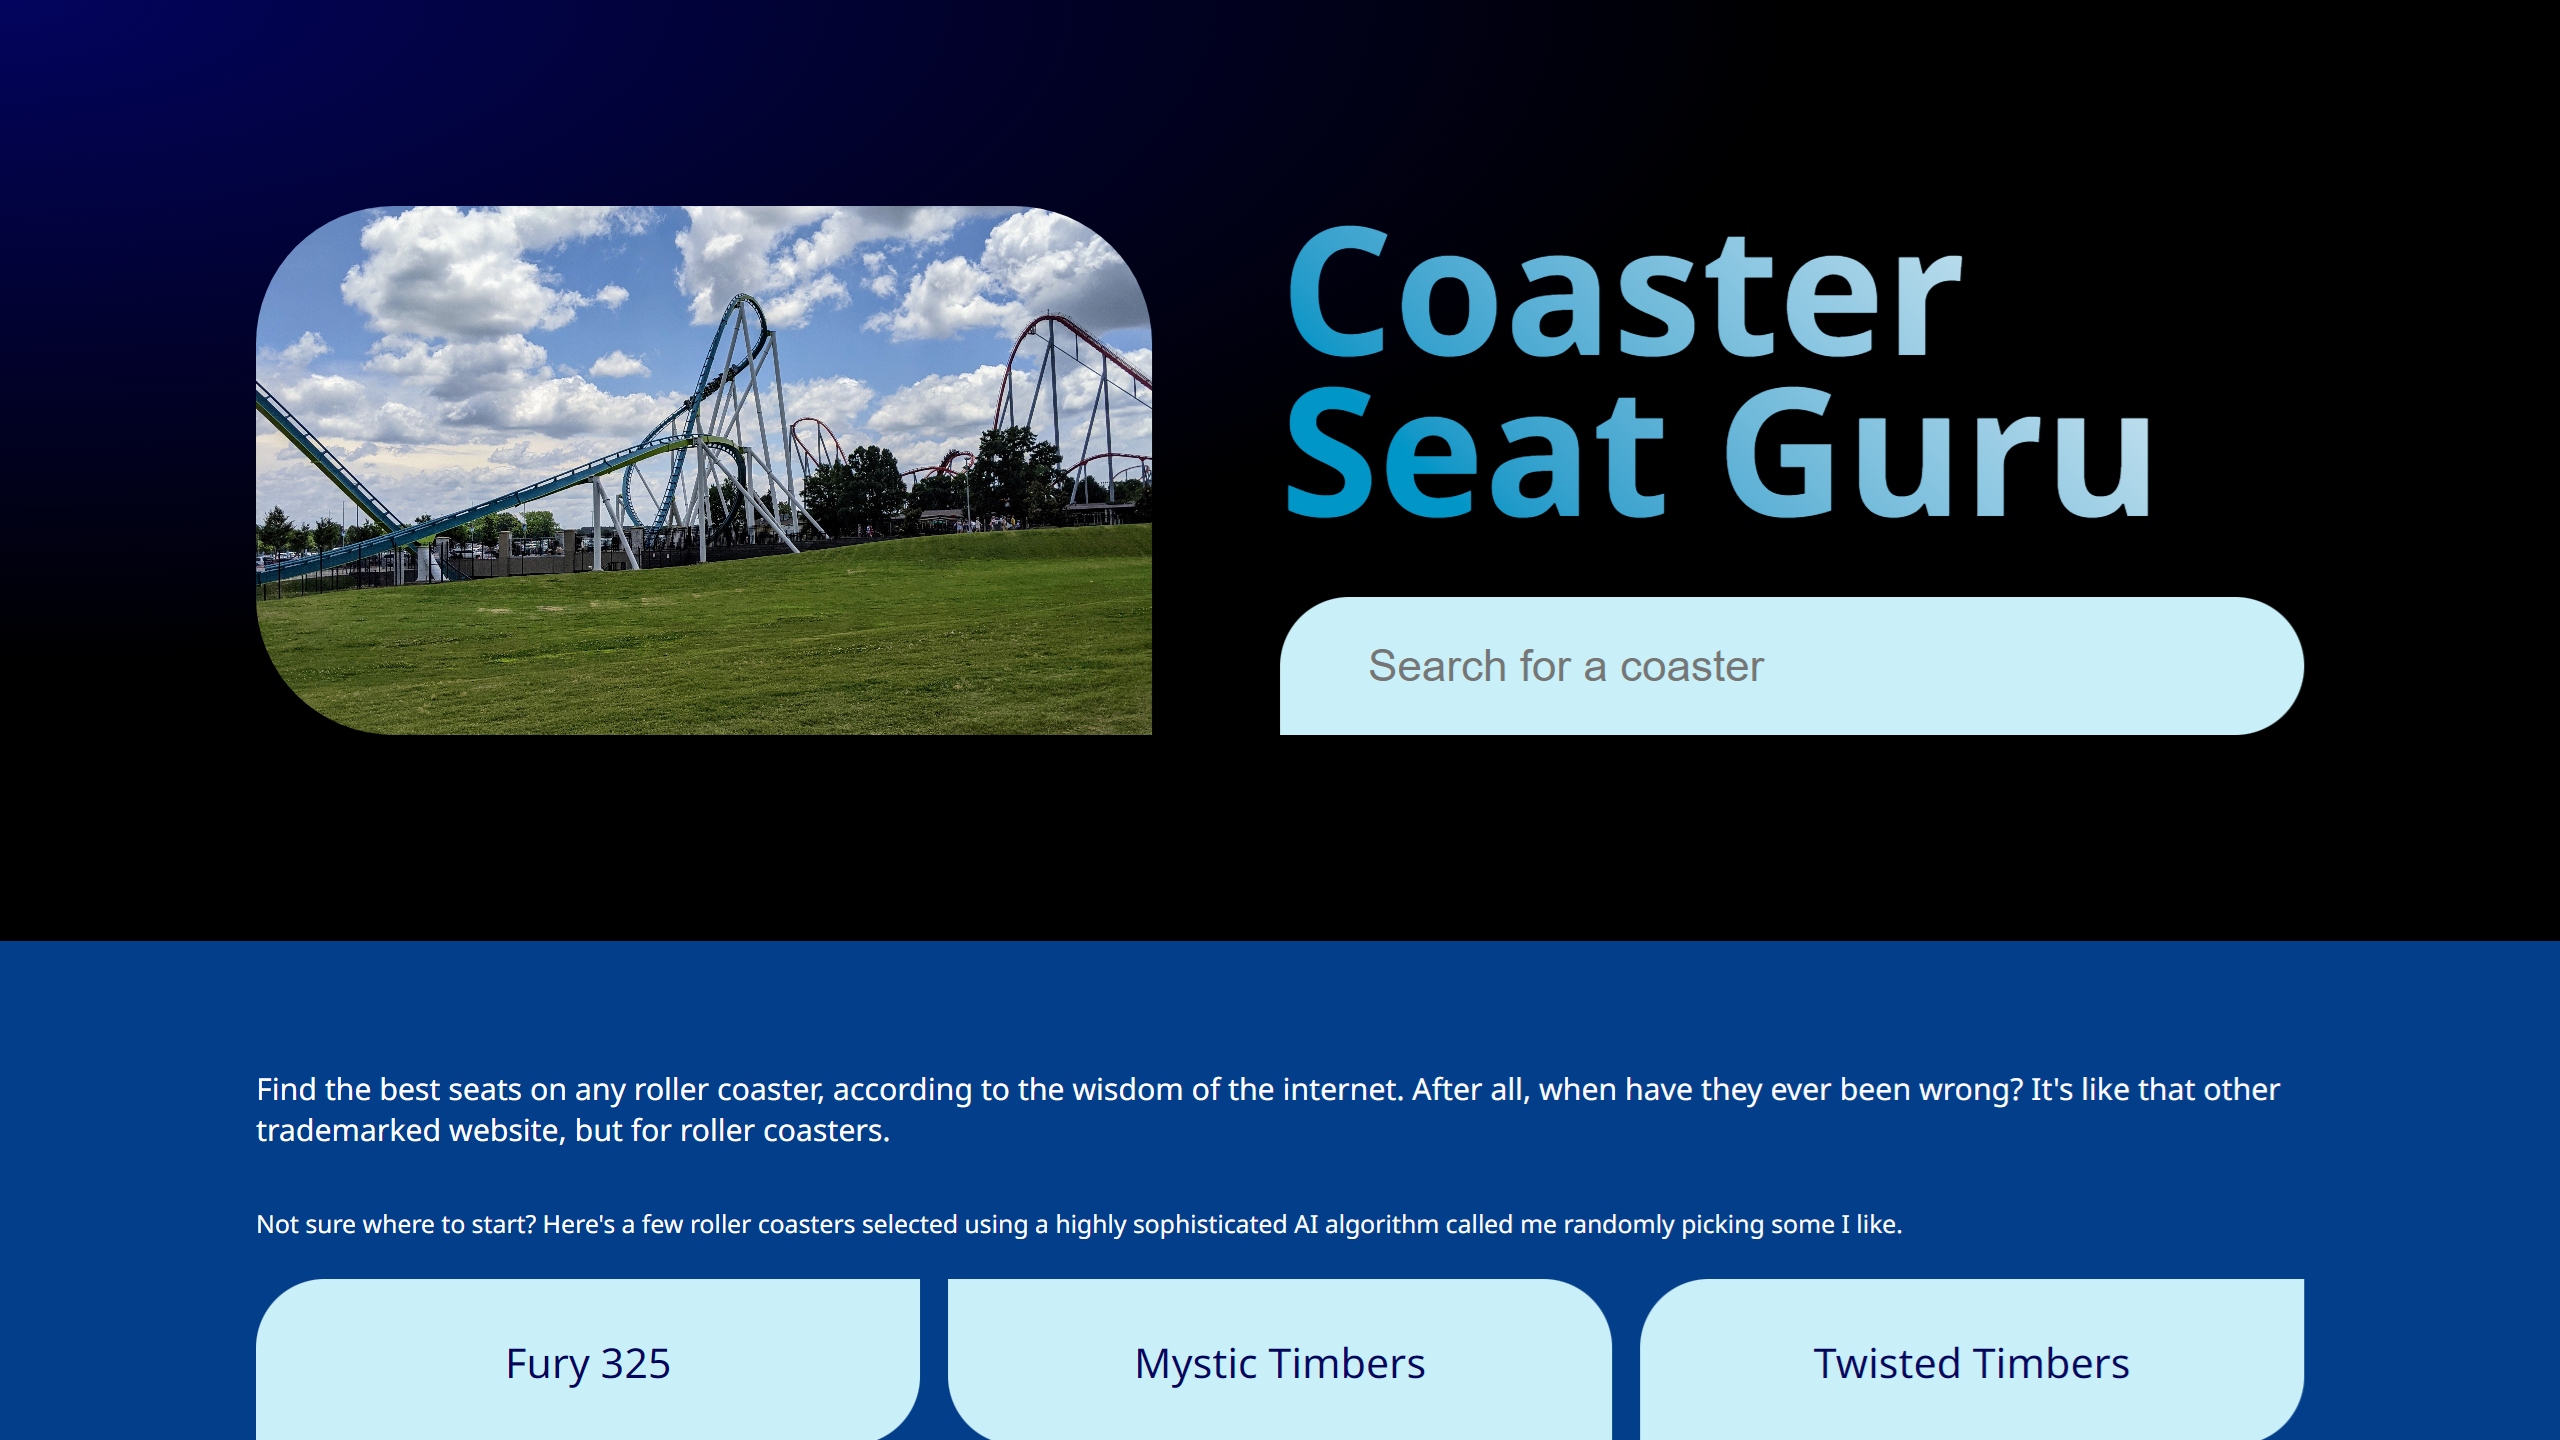 The home page of Coaster Seat Guru